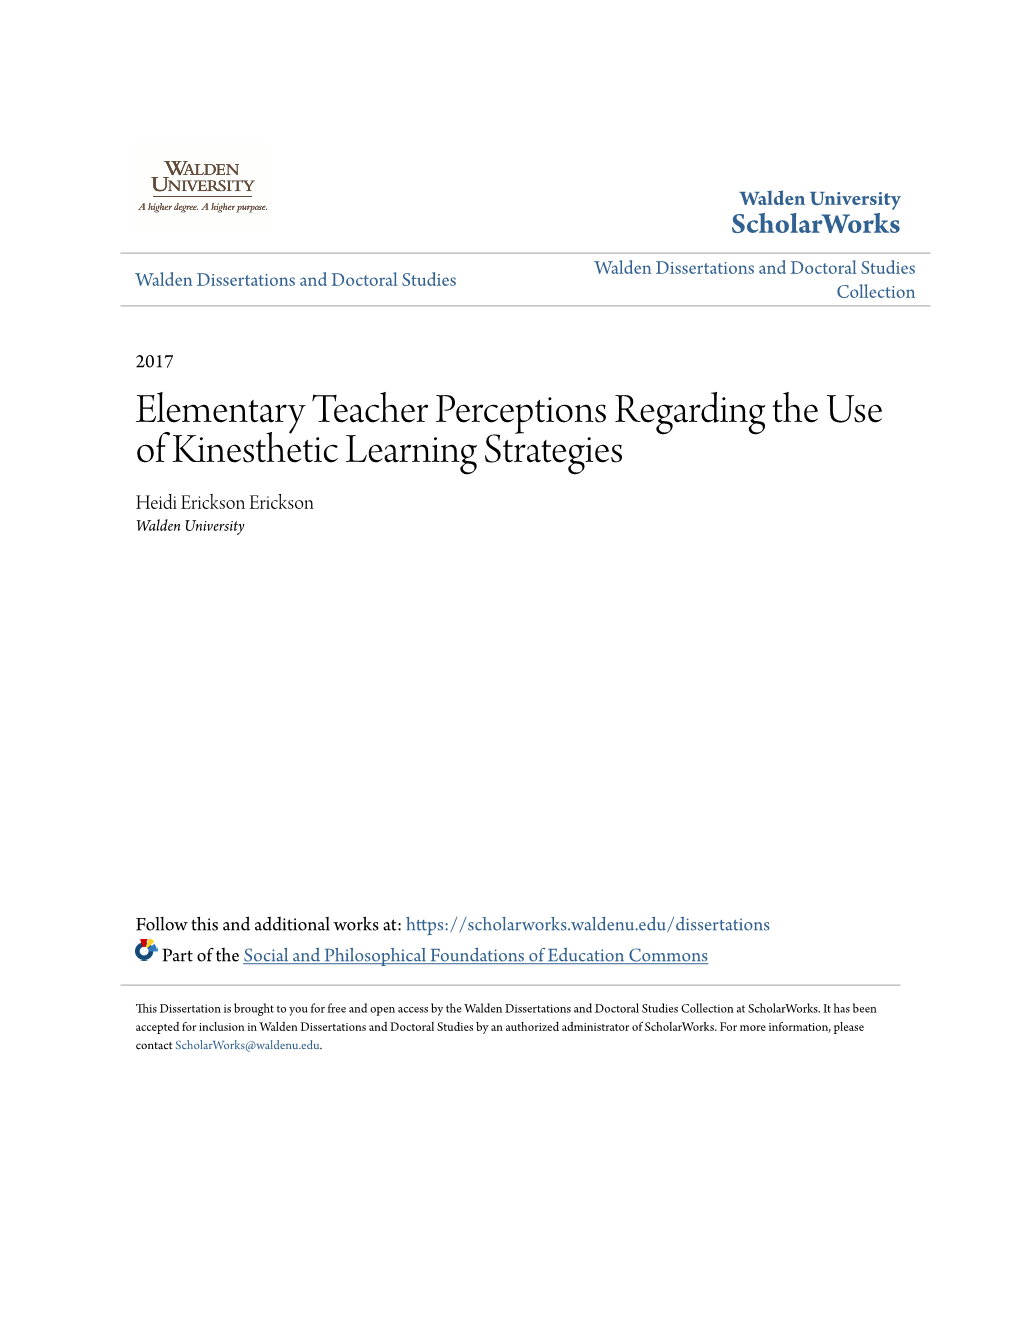 Elementary Teacher Perceptions Regarding the Use of Kinesthetic Learning Strategies Heidi Erickson Erickson Walden University